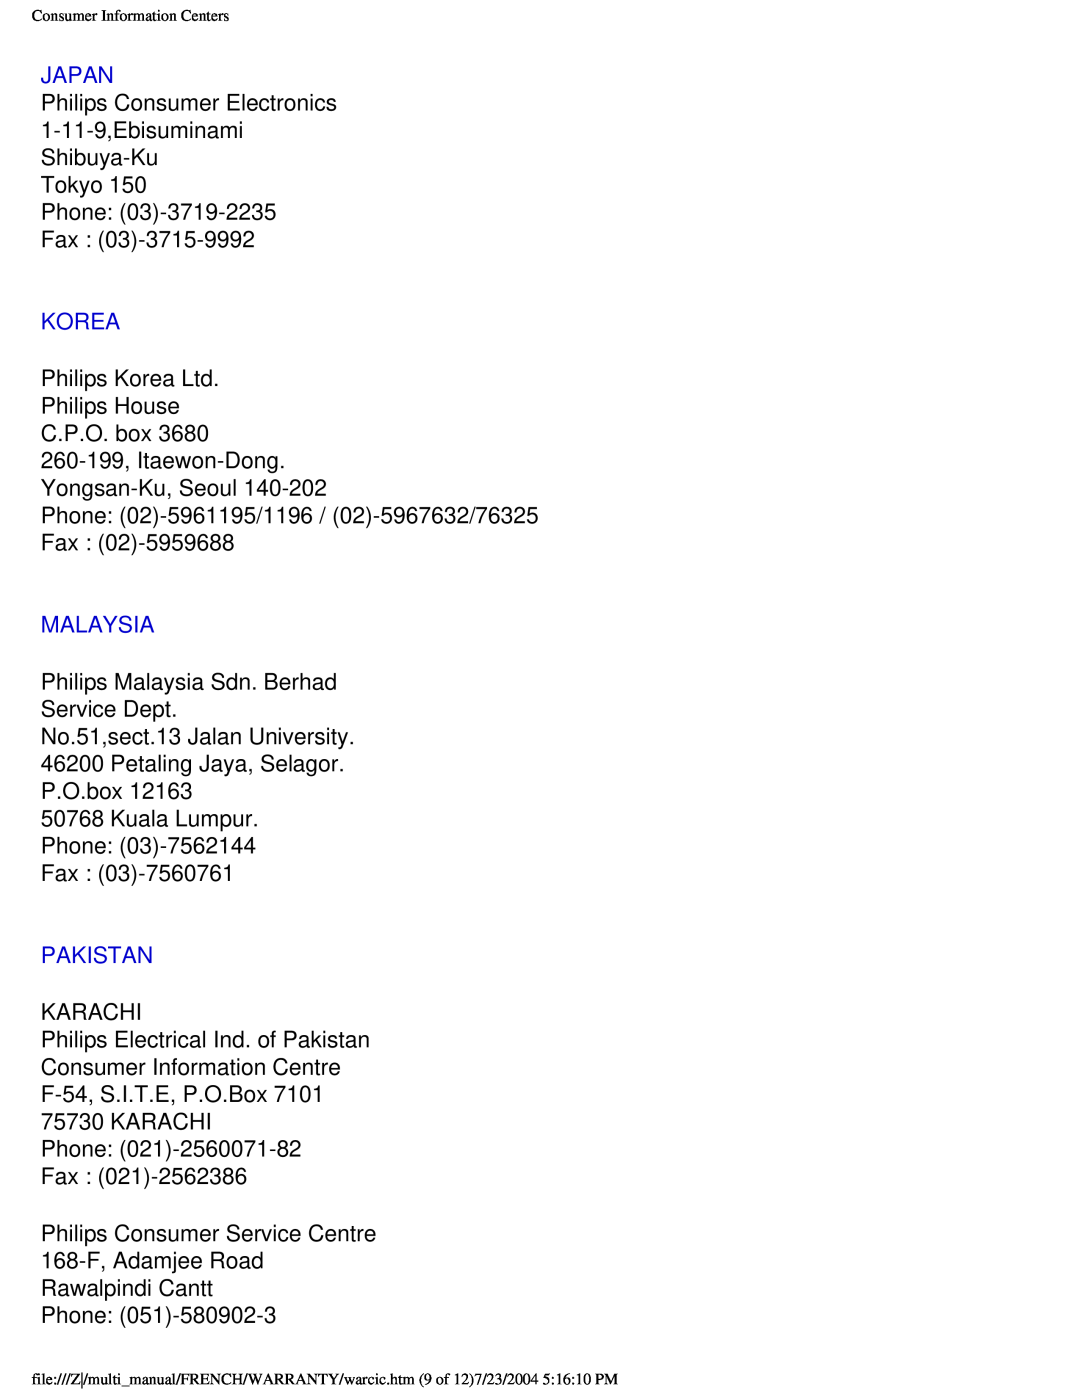 Philips 107B3 user manual Japan, Tokyo Phone: Fax, Korea, Malaysia, Pakistan 